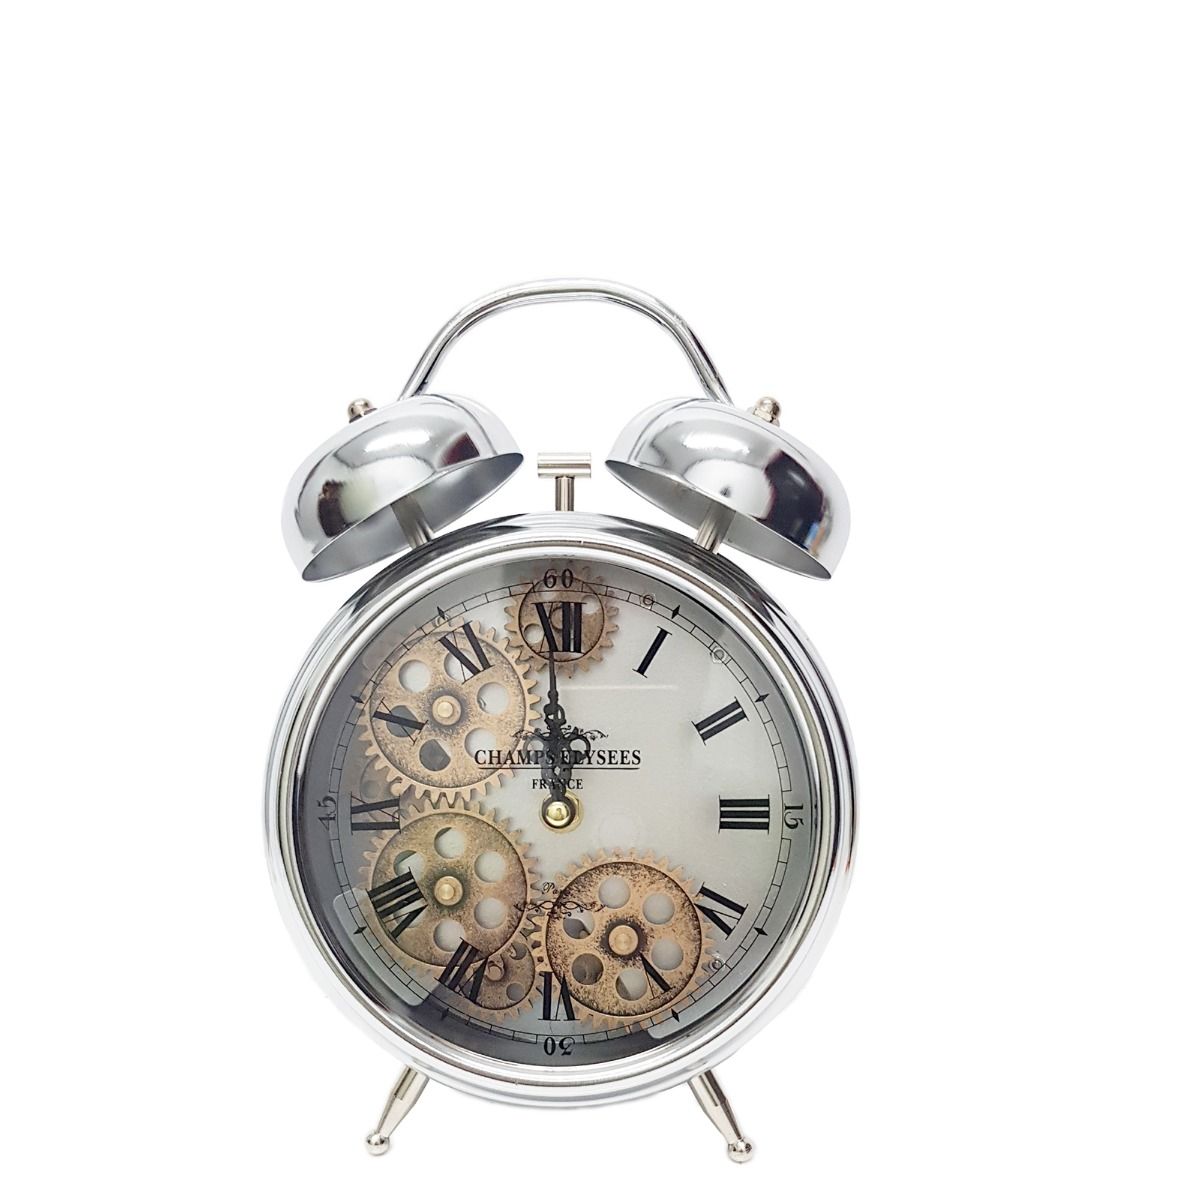 Industrial/vintage-inspired clock range - MODEL 026